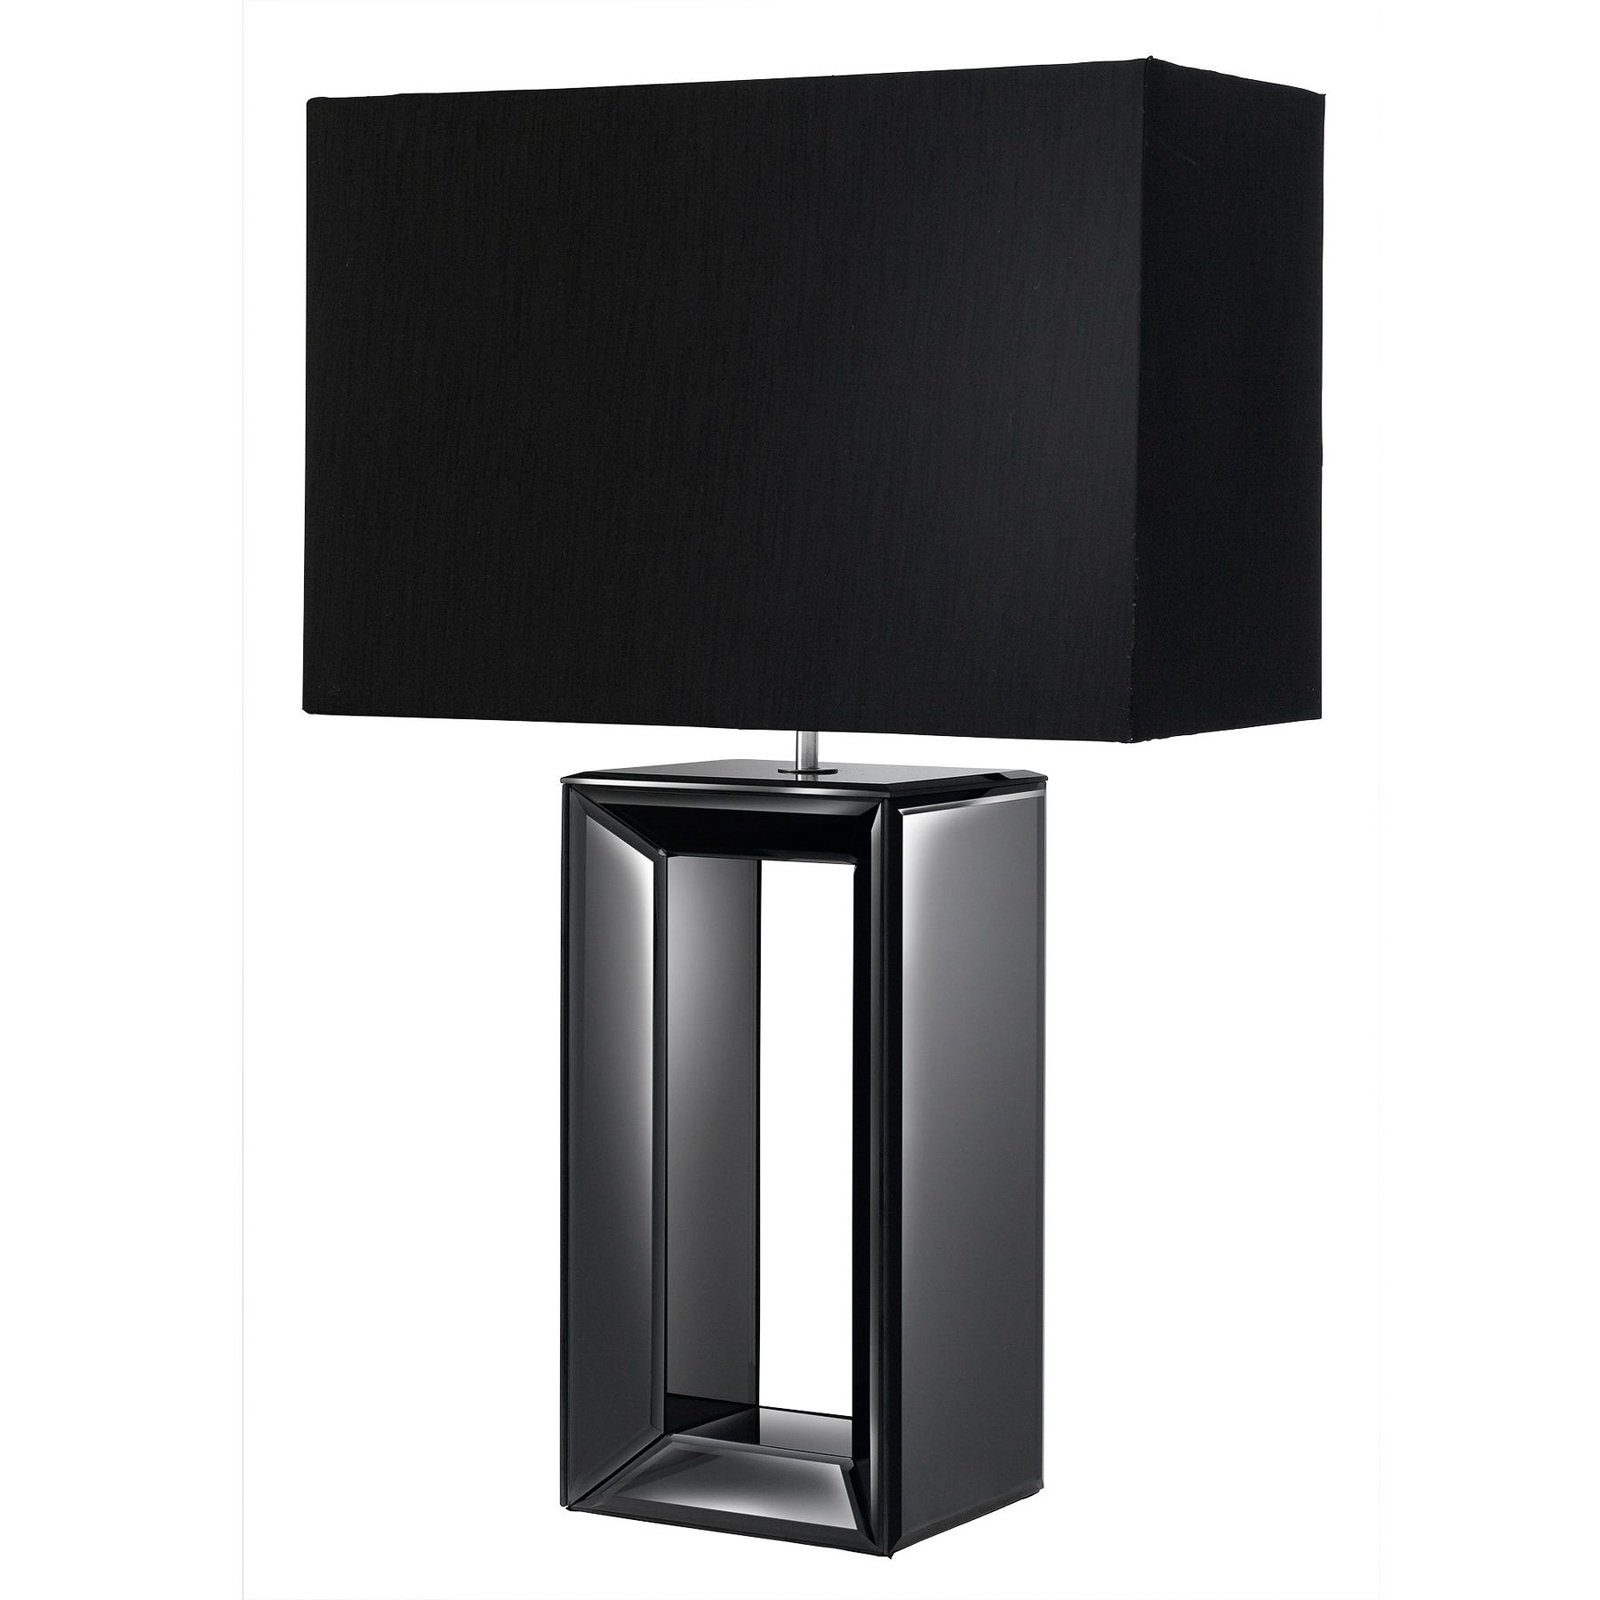 Mirror fabric table lamp, black